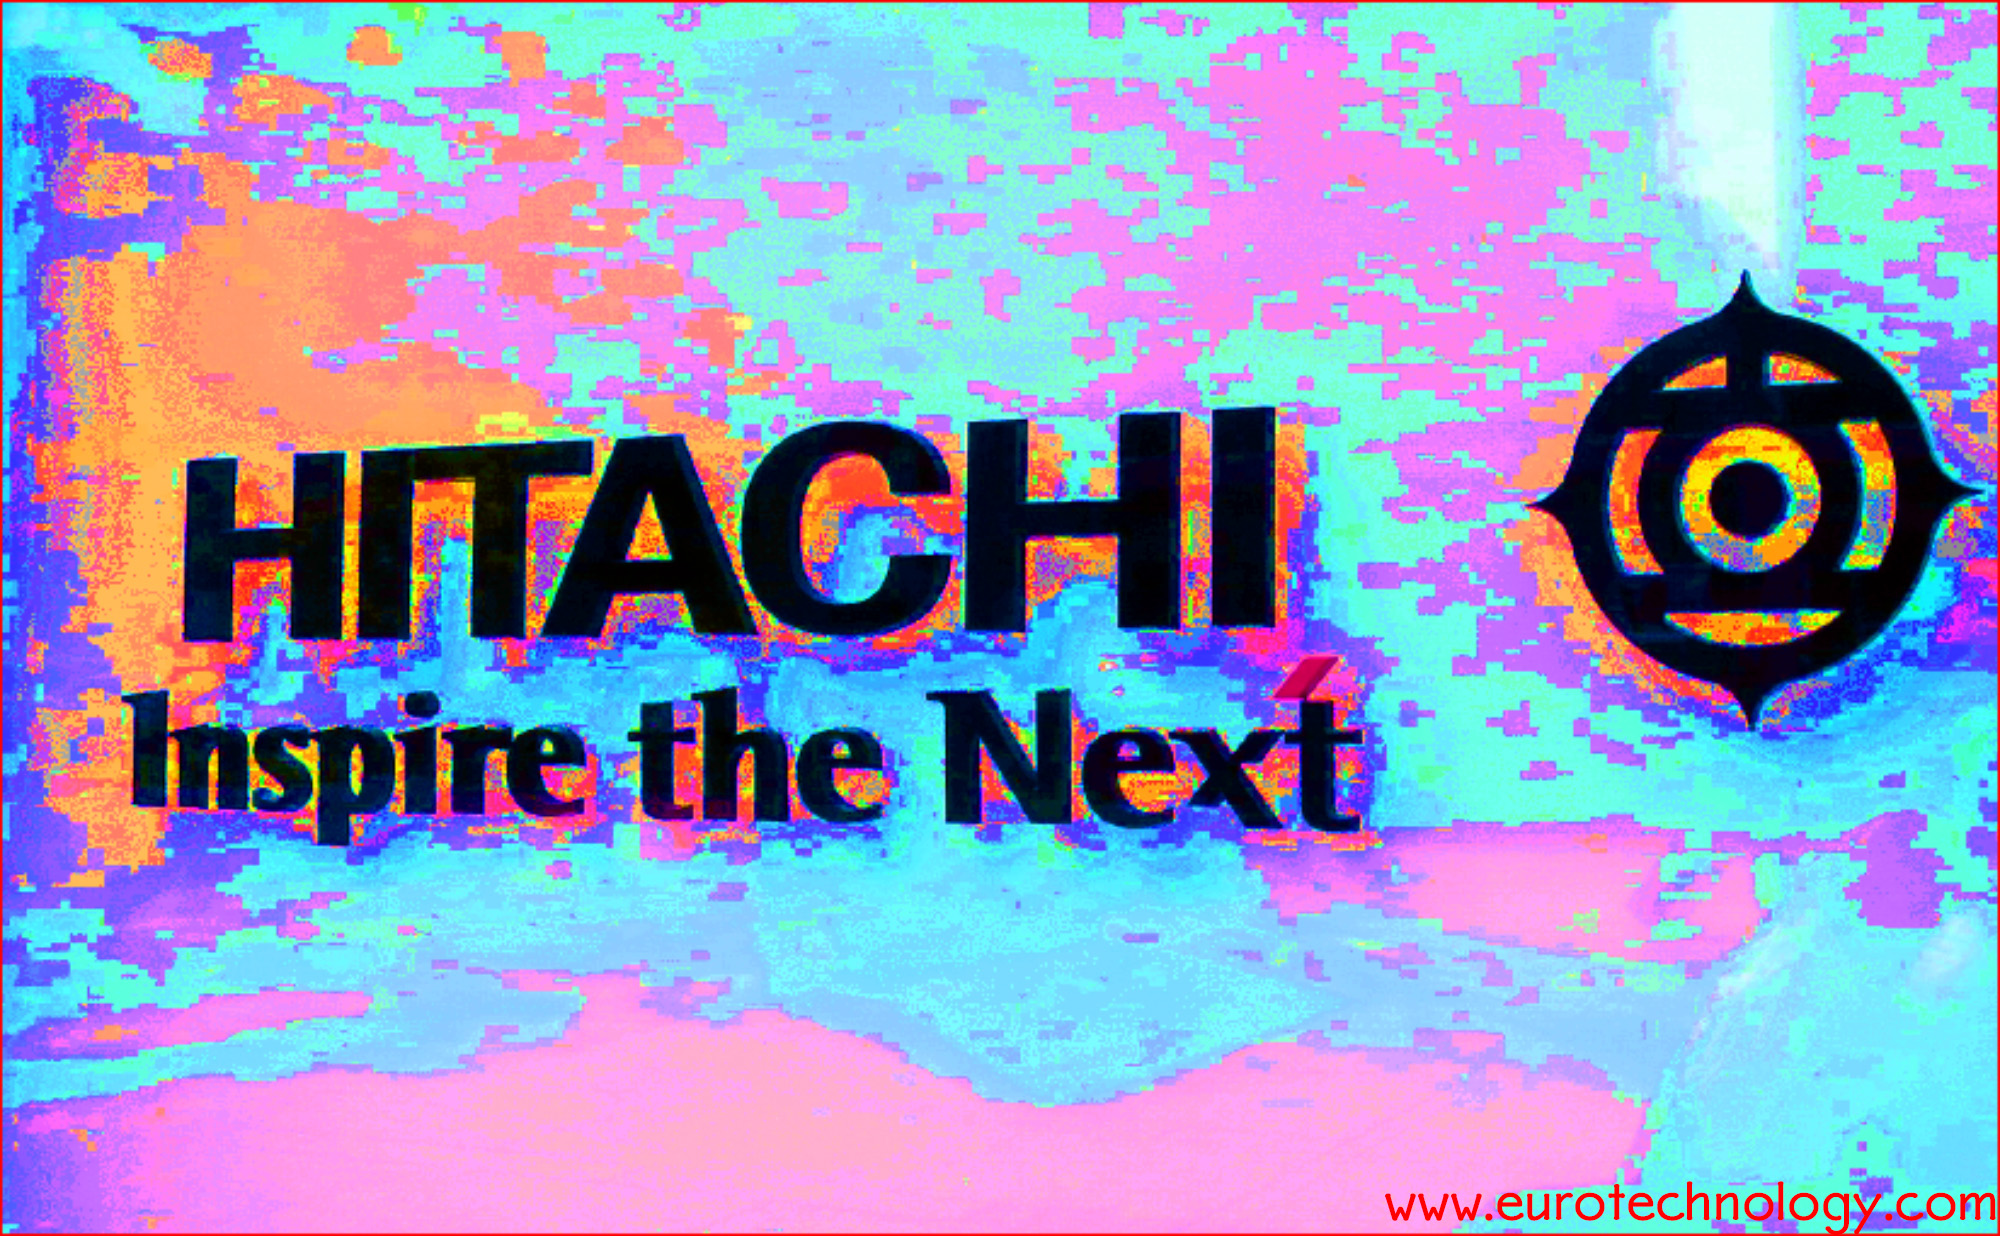 Hitachi “inspire the next” Europe opens Rail Research Centre (ERRC)